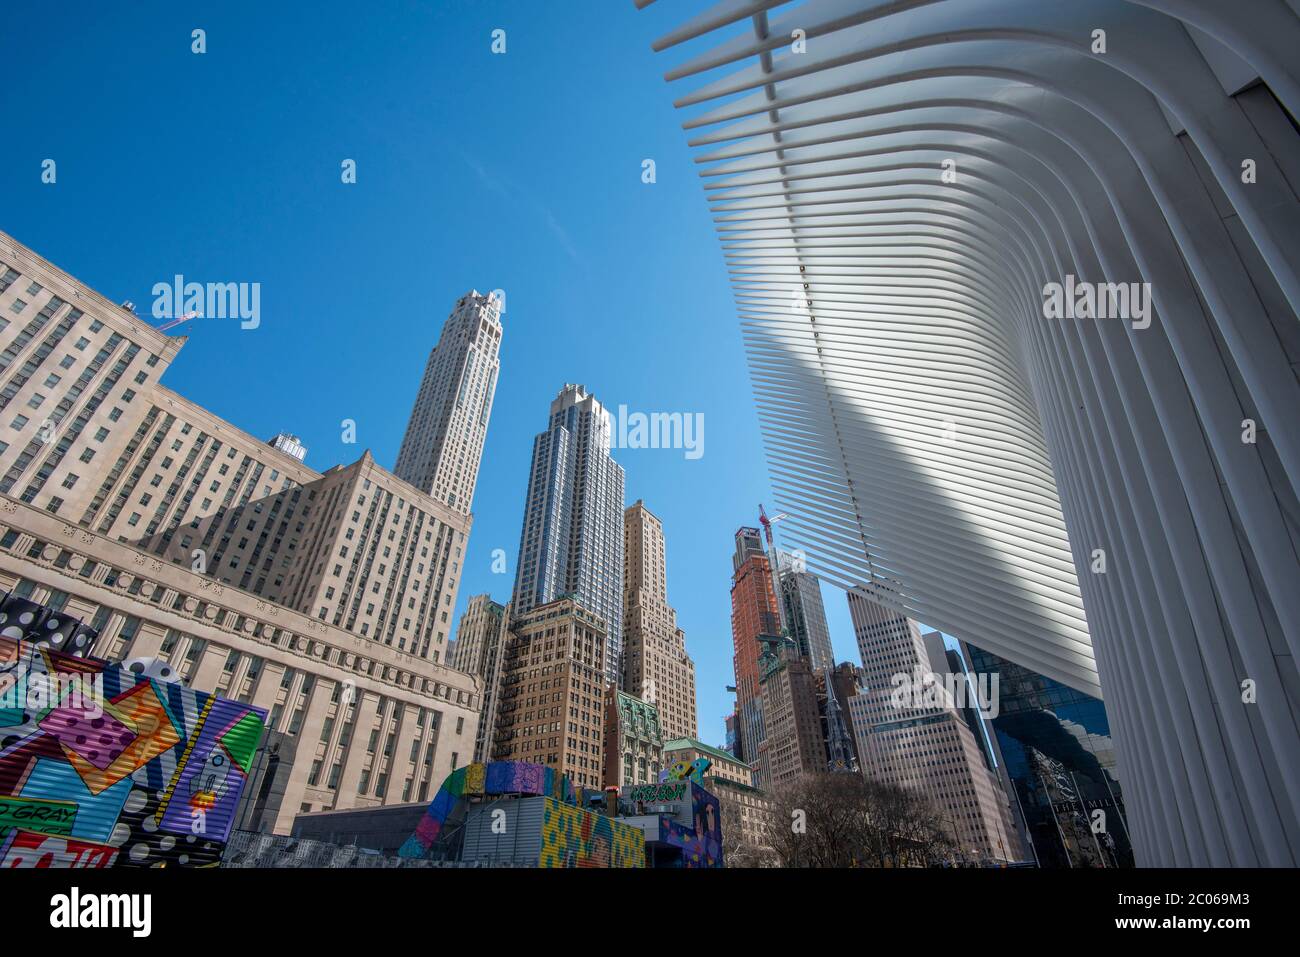 Station de métro Oculus et gratte-ciels, World Trade Center Transportation Hub, métro de New York, Ground Zero, World Trade Center, New York City Banque D'Images